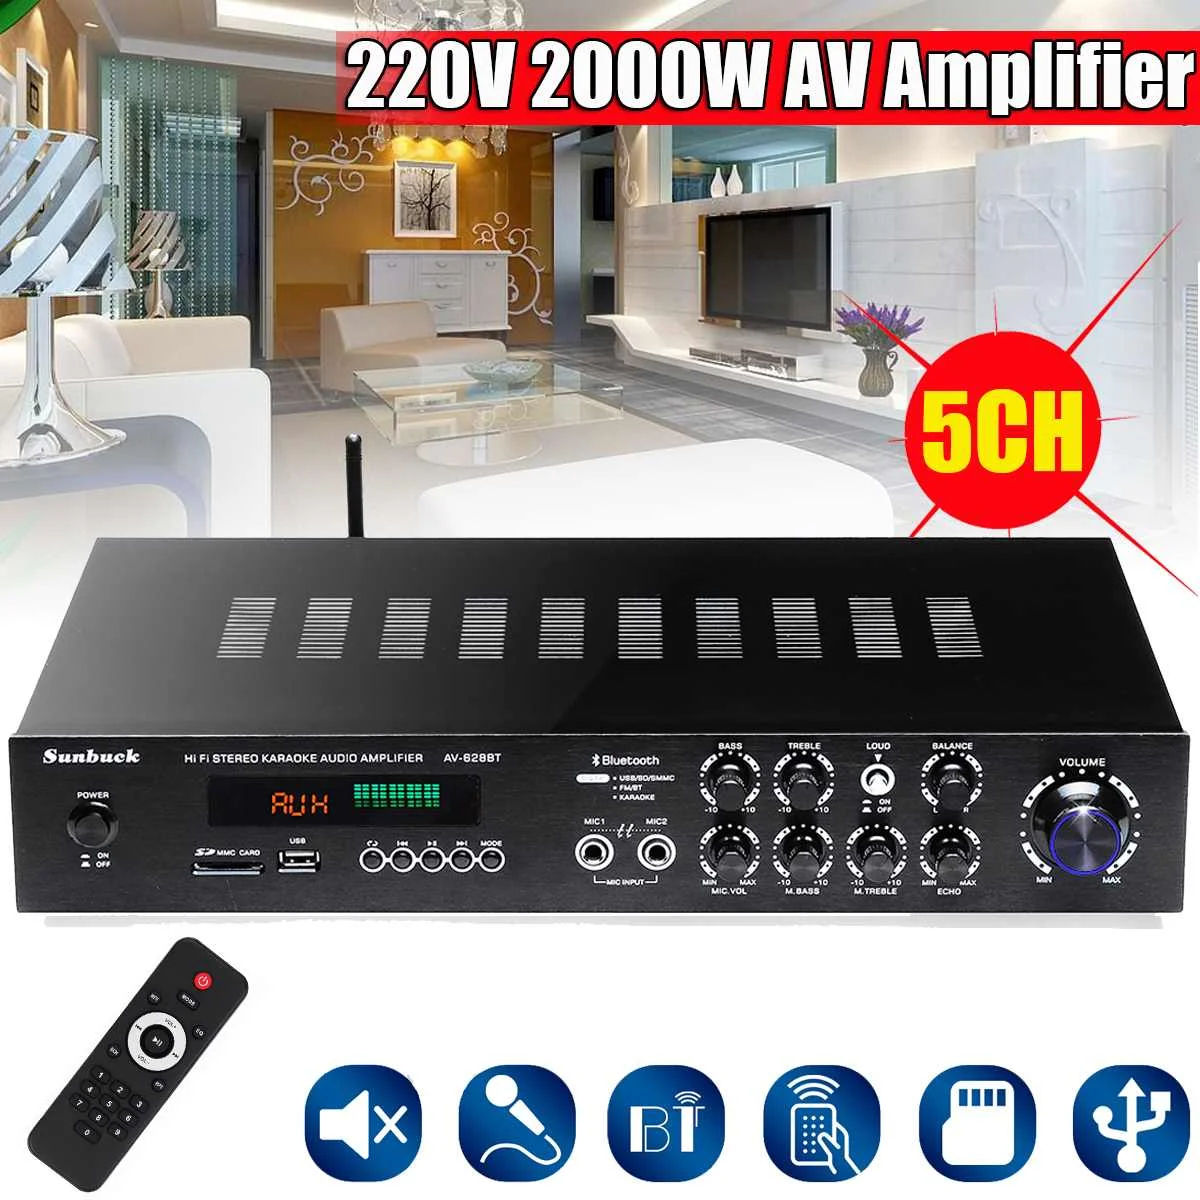 Review 220V AV Power Amplifier Lossless Audio Subwoofers HiFi Stereo Bluetooth Surround Sound Digital Powerful Home Karaoke Cinema